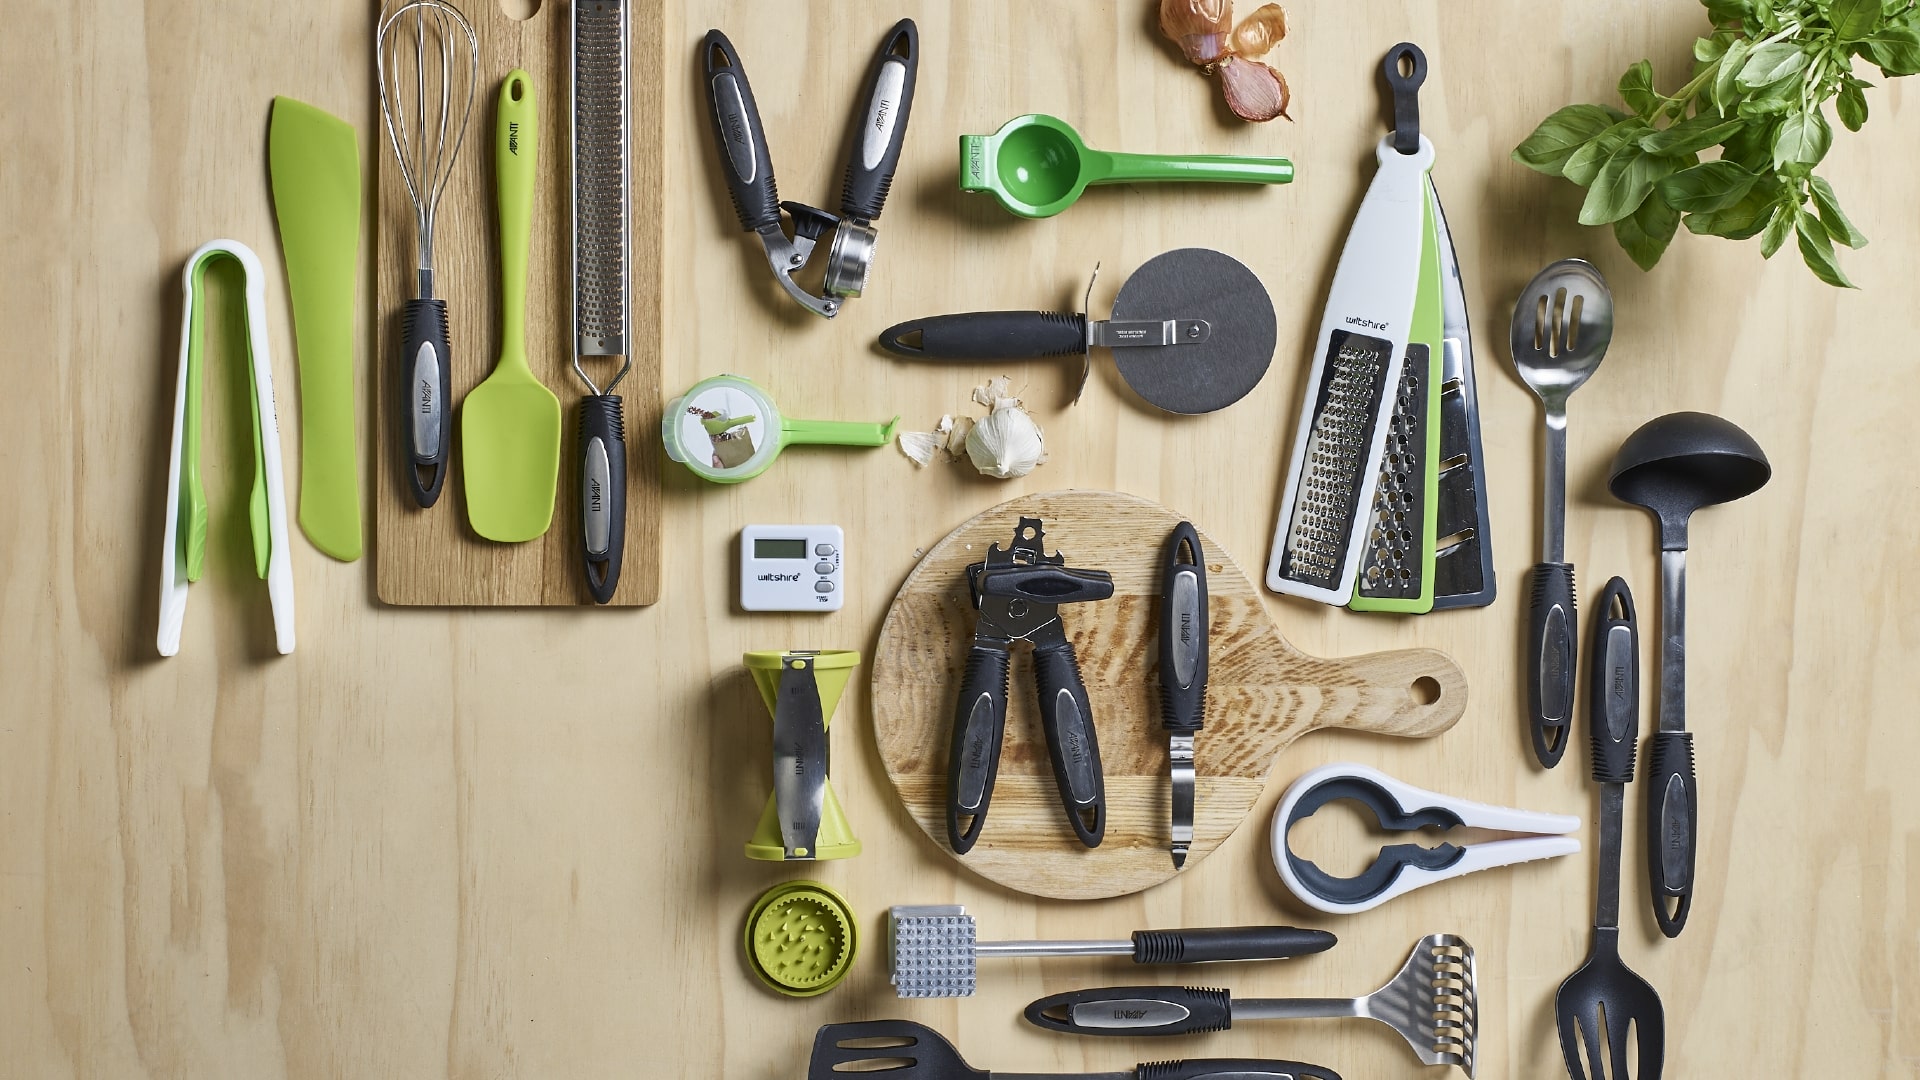 Kitchen Tools Utensils Buying Guide 2 ?context=bWFzdGVyfHJvb3R8MzU4MDQ0fGltYWdlL2pwZWd8cm9vdC9oZTQvaDQzLzEwODE3NTQ3MzcwNTI2L2tpdGNoZW4tdG9vbHMtdXRlbnNpbHMtYnV5aW5nLWd1aWRlLTIuanBnfGIyNGVhNjFiY2RkOTcwZGE5N2QwMmNmNTcwNWE3MGIzYjAwOWUyNjBhNzYxZjNjMWFjODNkNTM5M2I2YWZkM2M